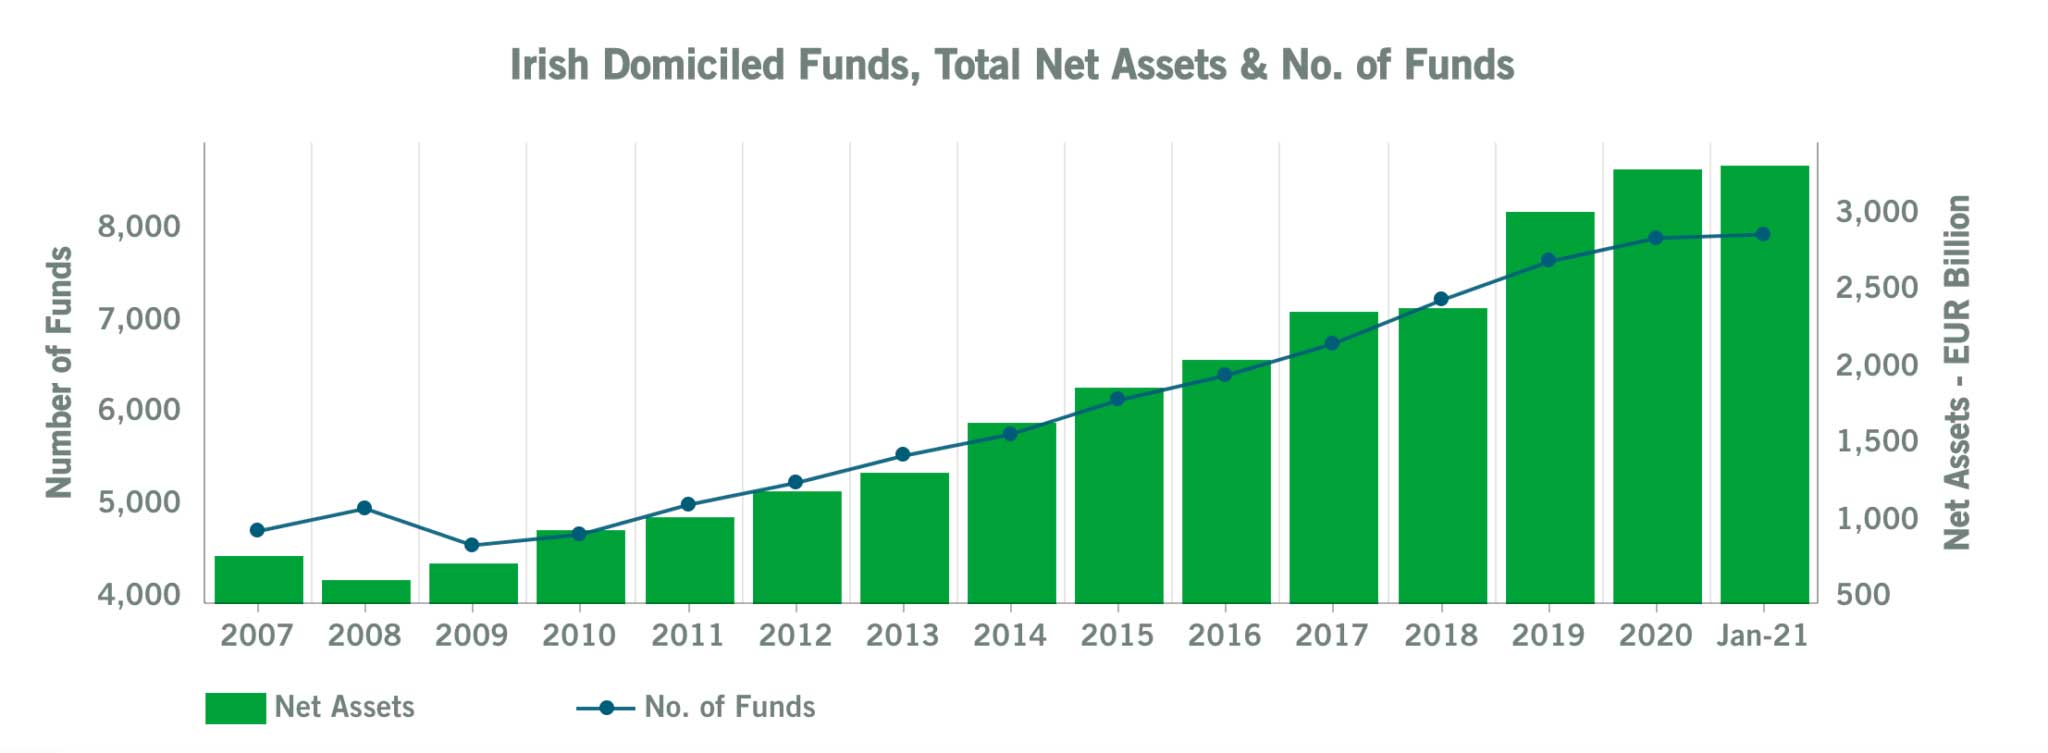 irish funds industry growth